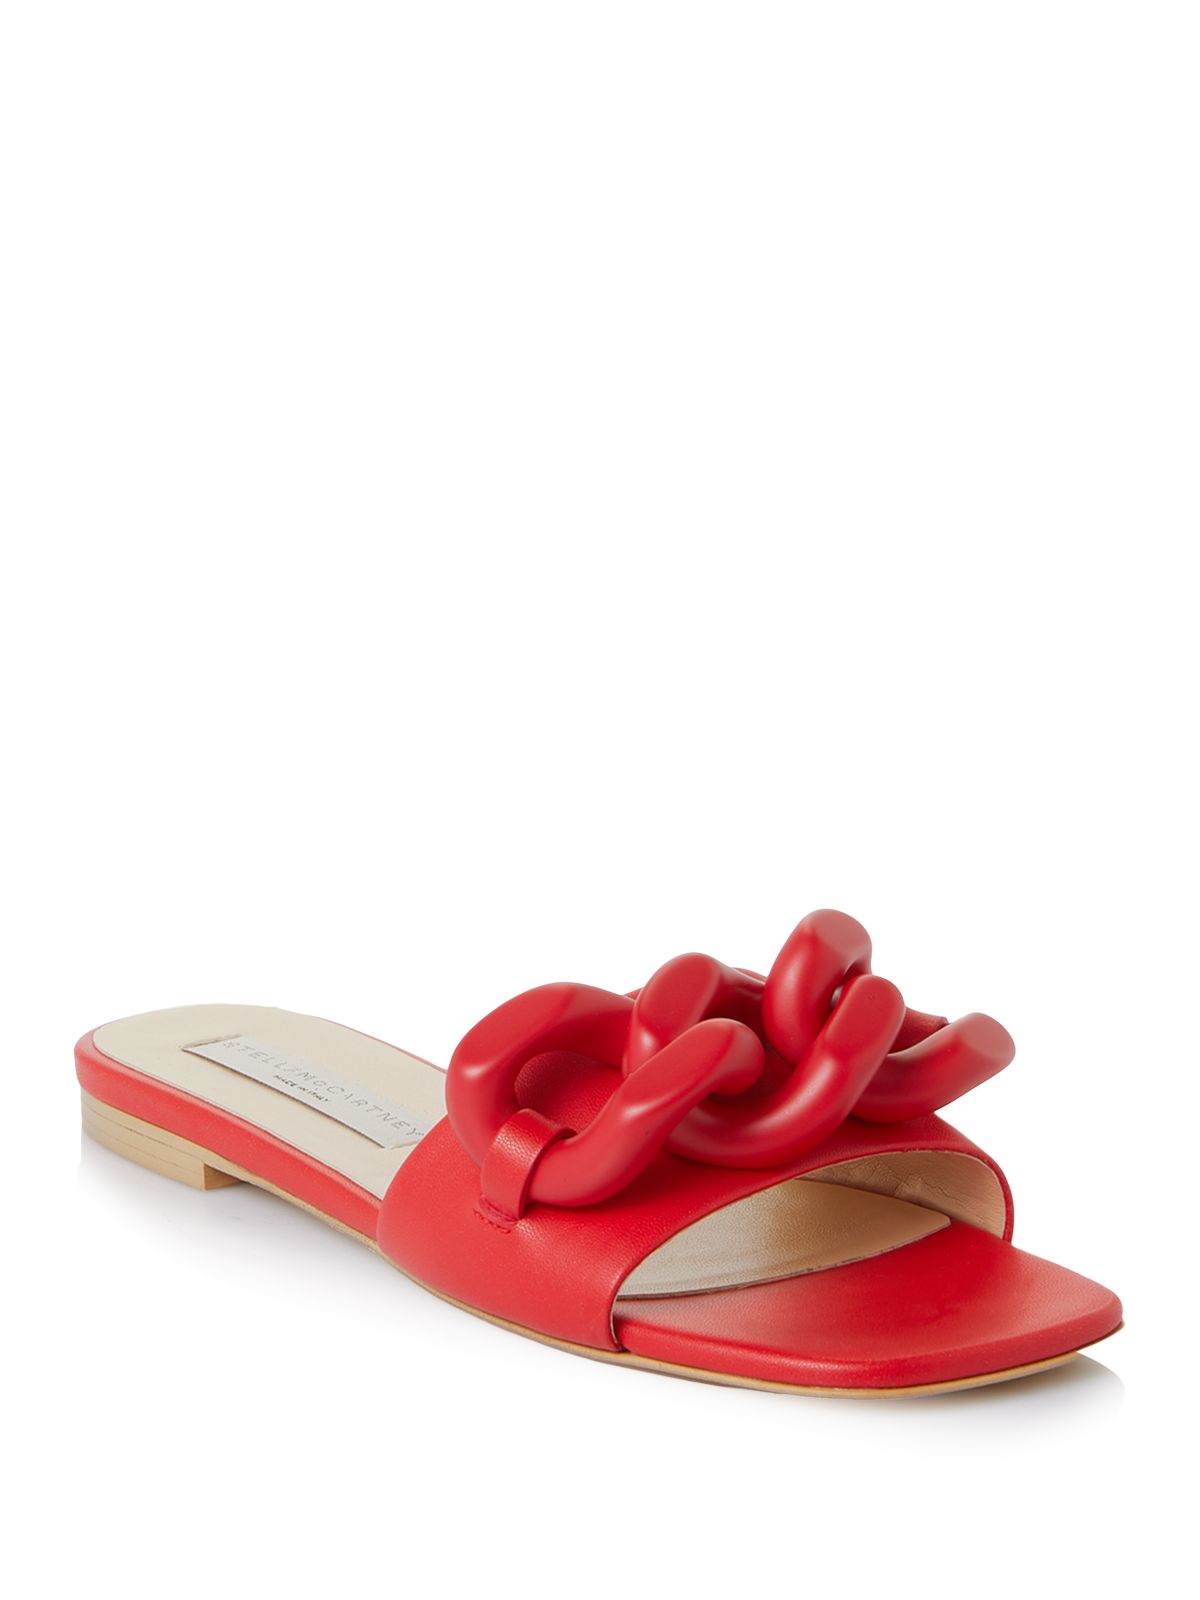 STELLAMCCARTNEY Womens Red Tonal Chain Hardware Padded Falabella Square Toe Slip On Slide Sandals Shoes 37